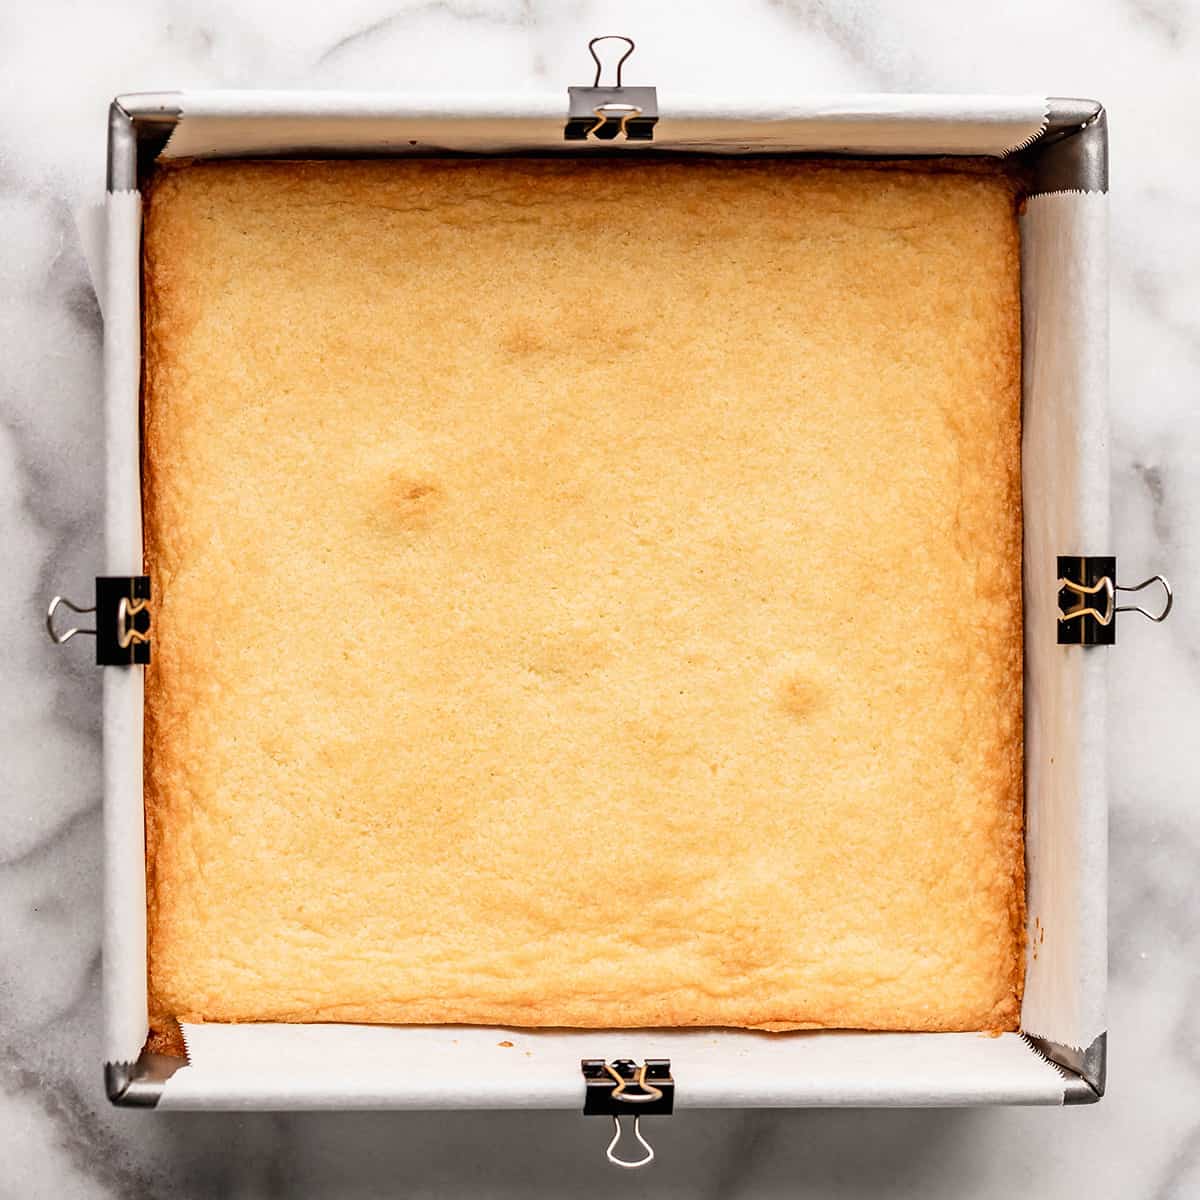 sugar cookie bar dough in an 8" baking pan before baking